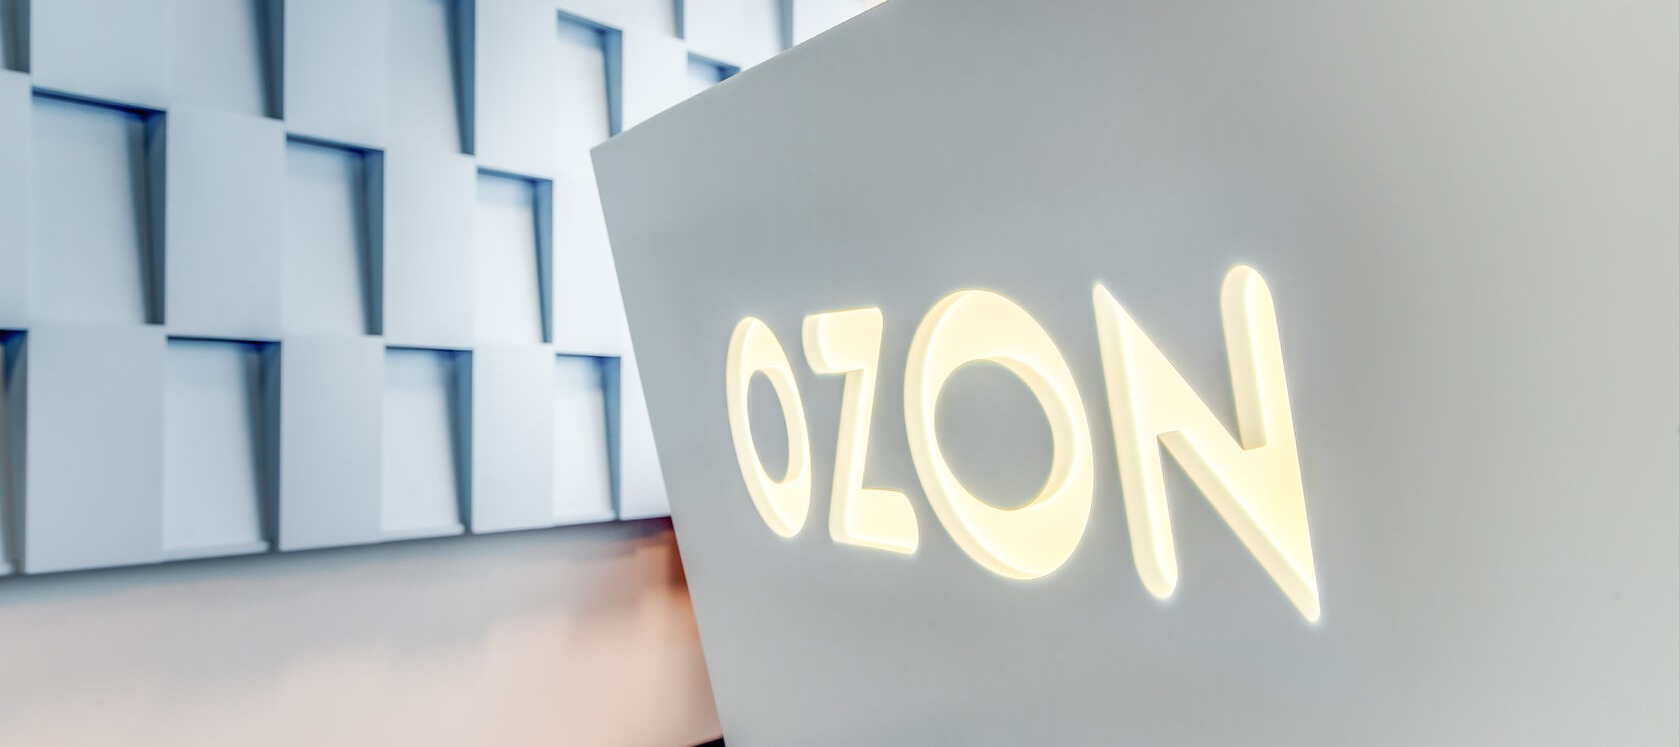 Фото новости: "Ozon открыл сторонним компаниям доступ к платформе Ozon Profit"